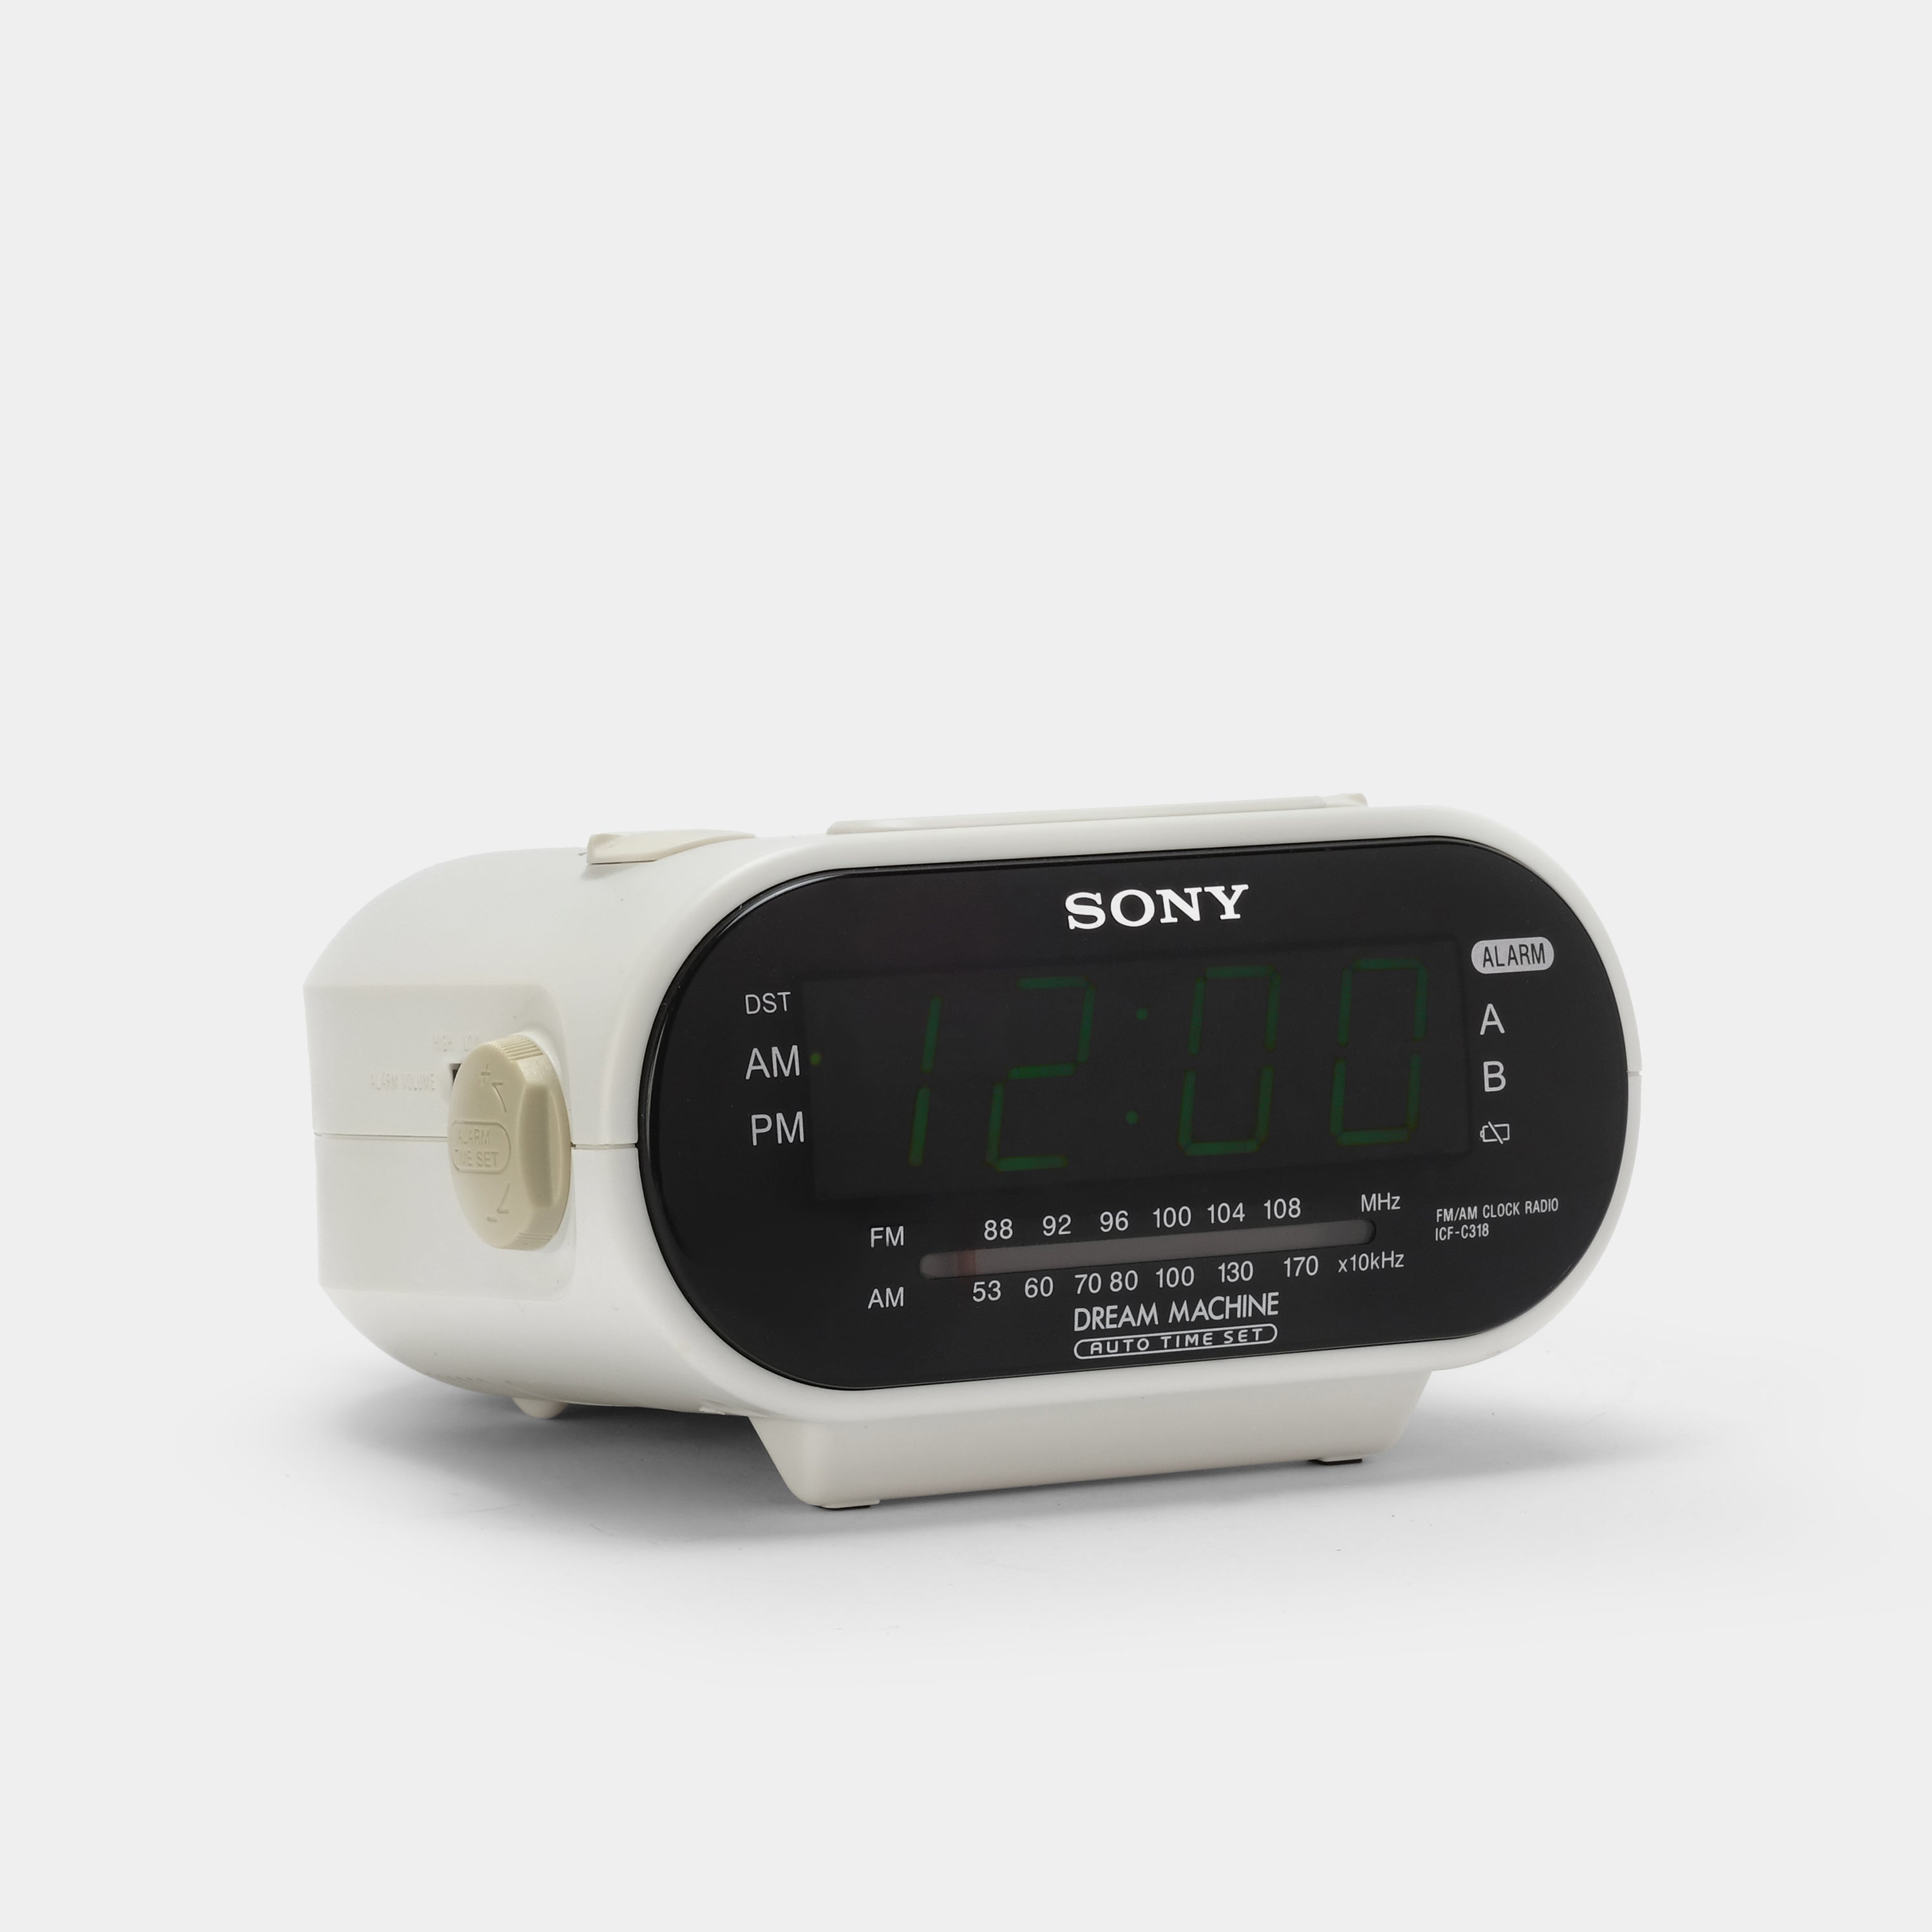 Sony ICF-C318 Dream Machine Alarm Clock Radio